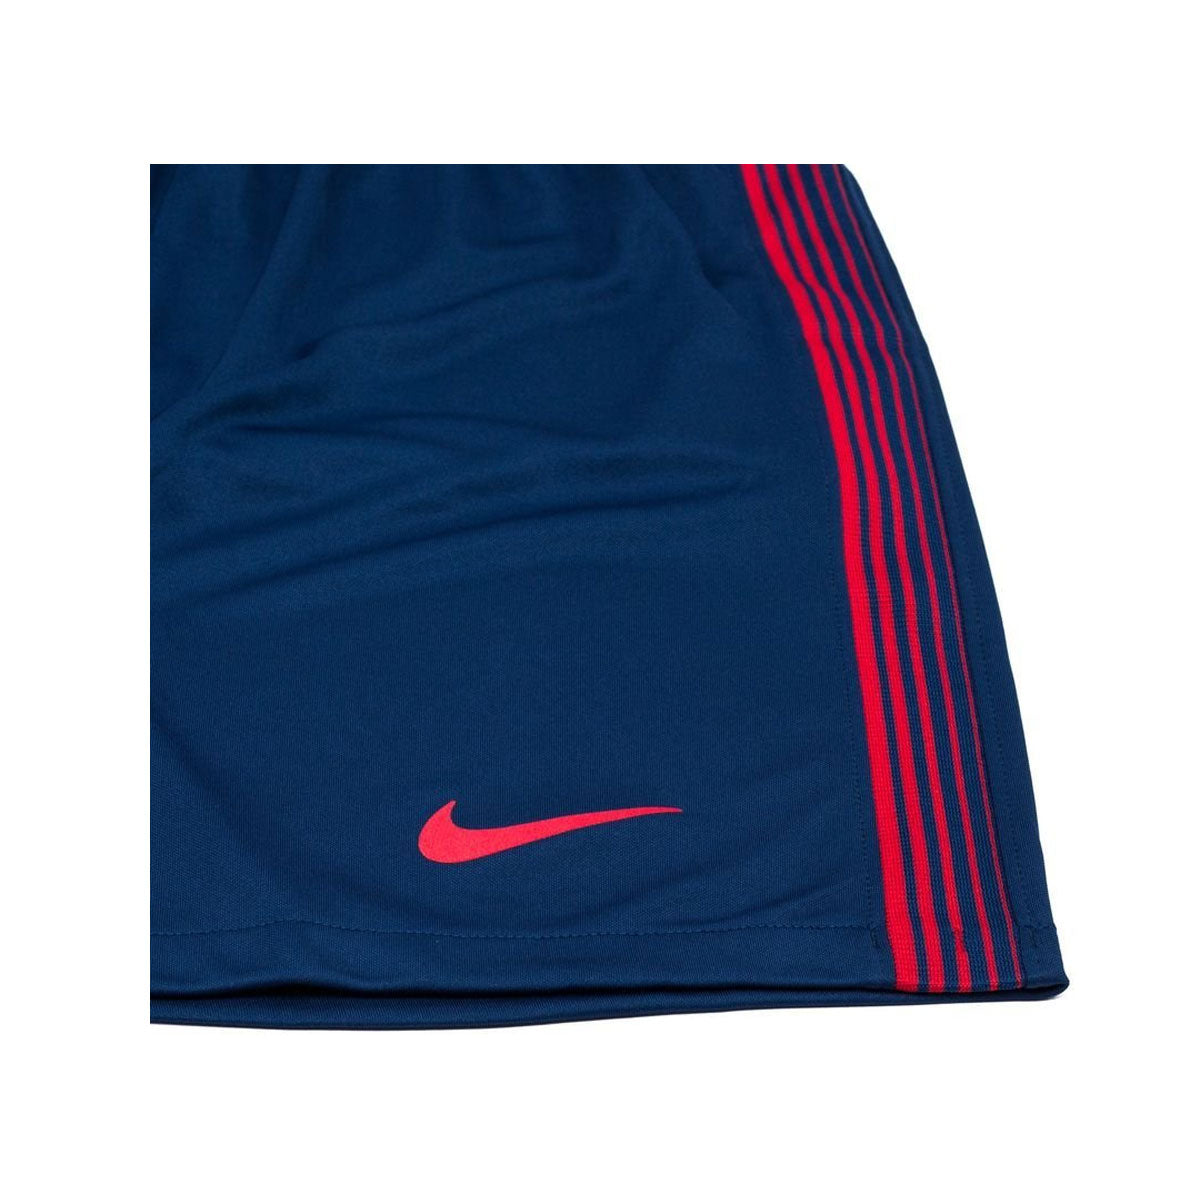 Nike Men's Atletico Madrid Away Football Shorts